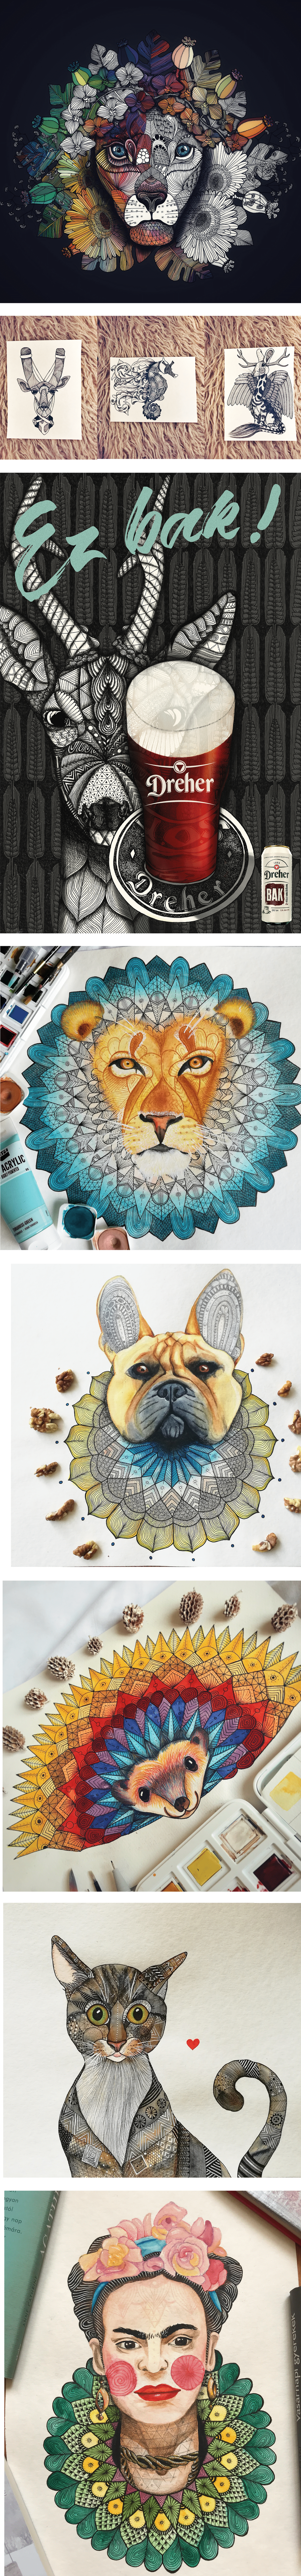 2019 design animaldrawing animalportrait coloring emerging artist hungarian mixedmedia portrait watercolor